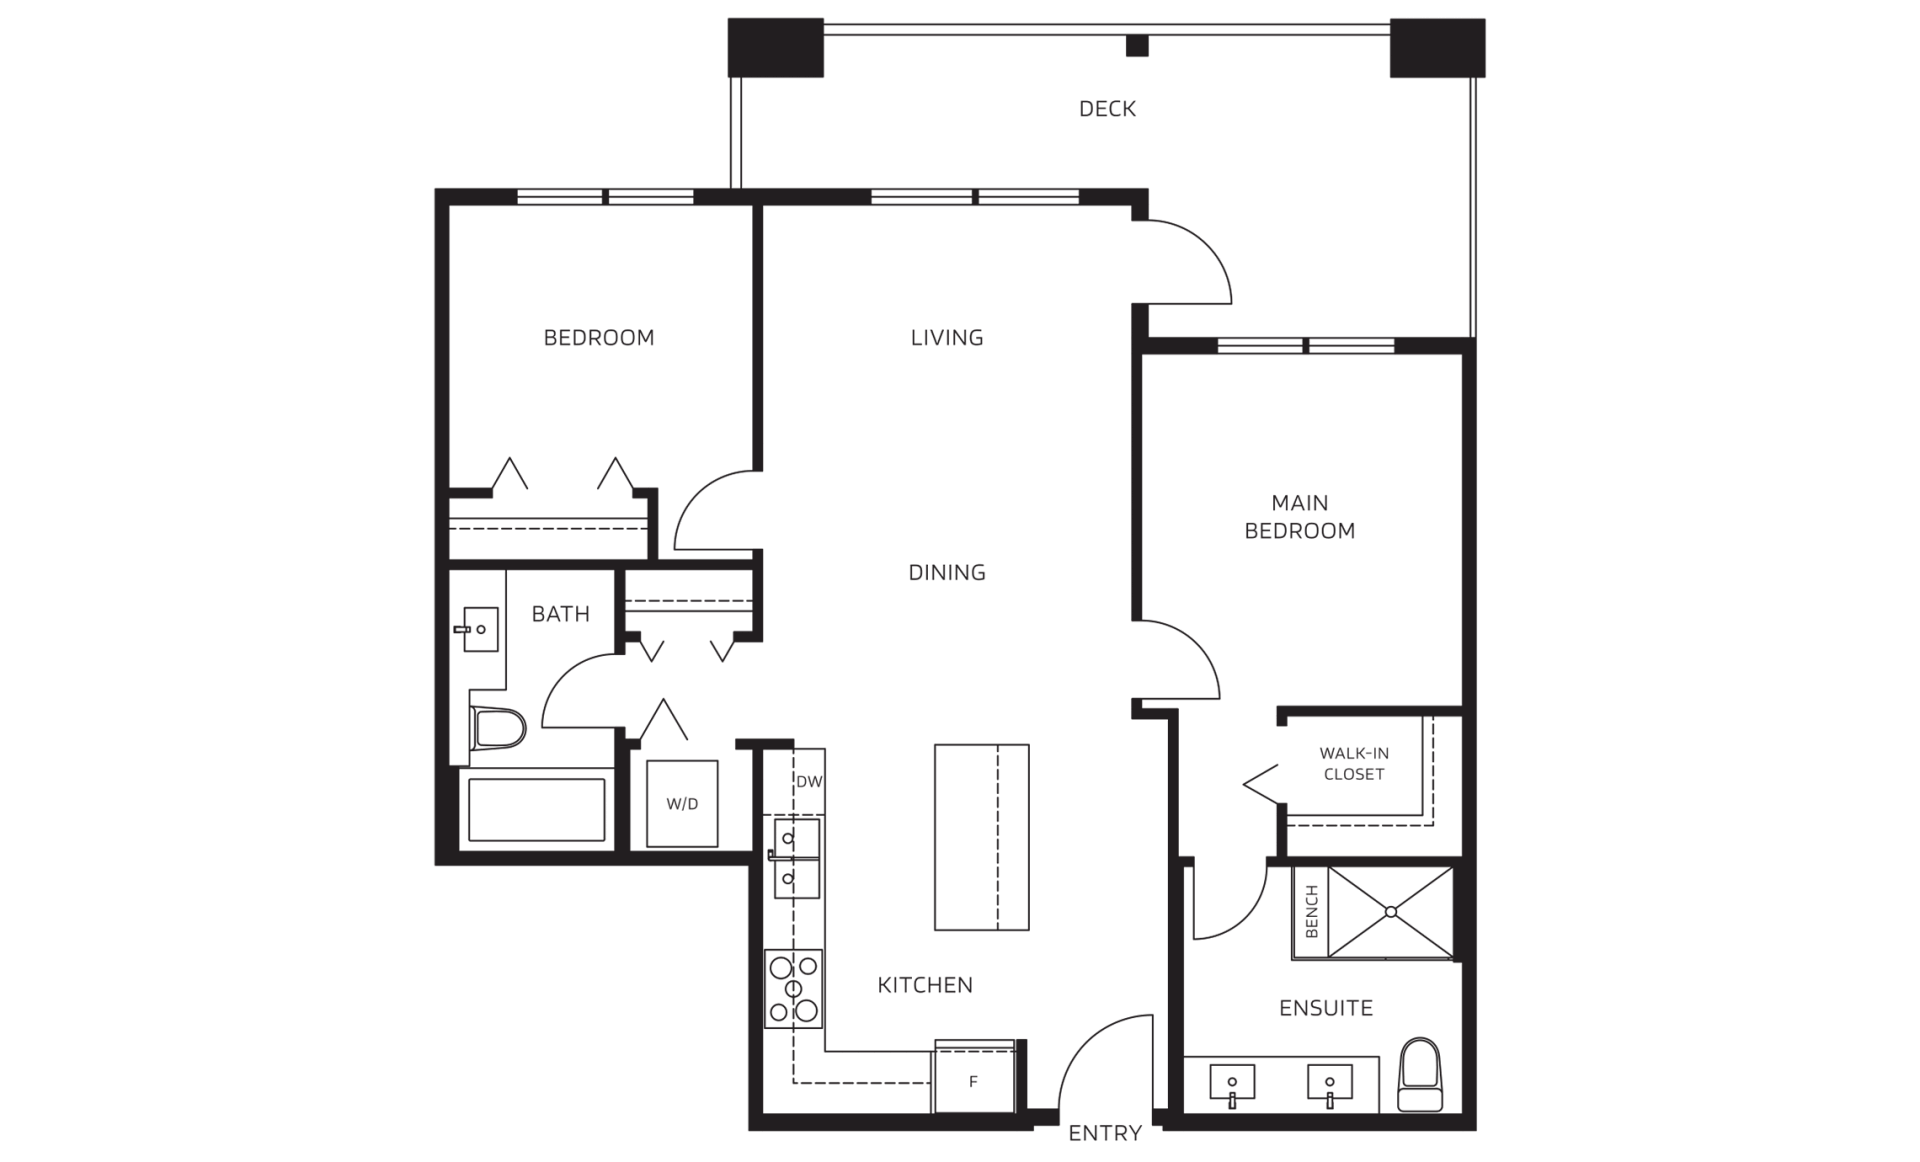  Floor Plan of Skylark Condos with undefined beds